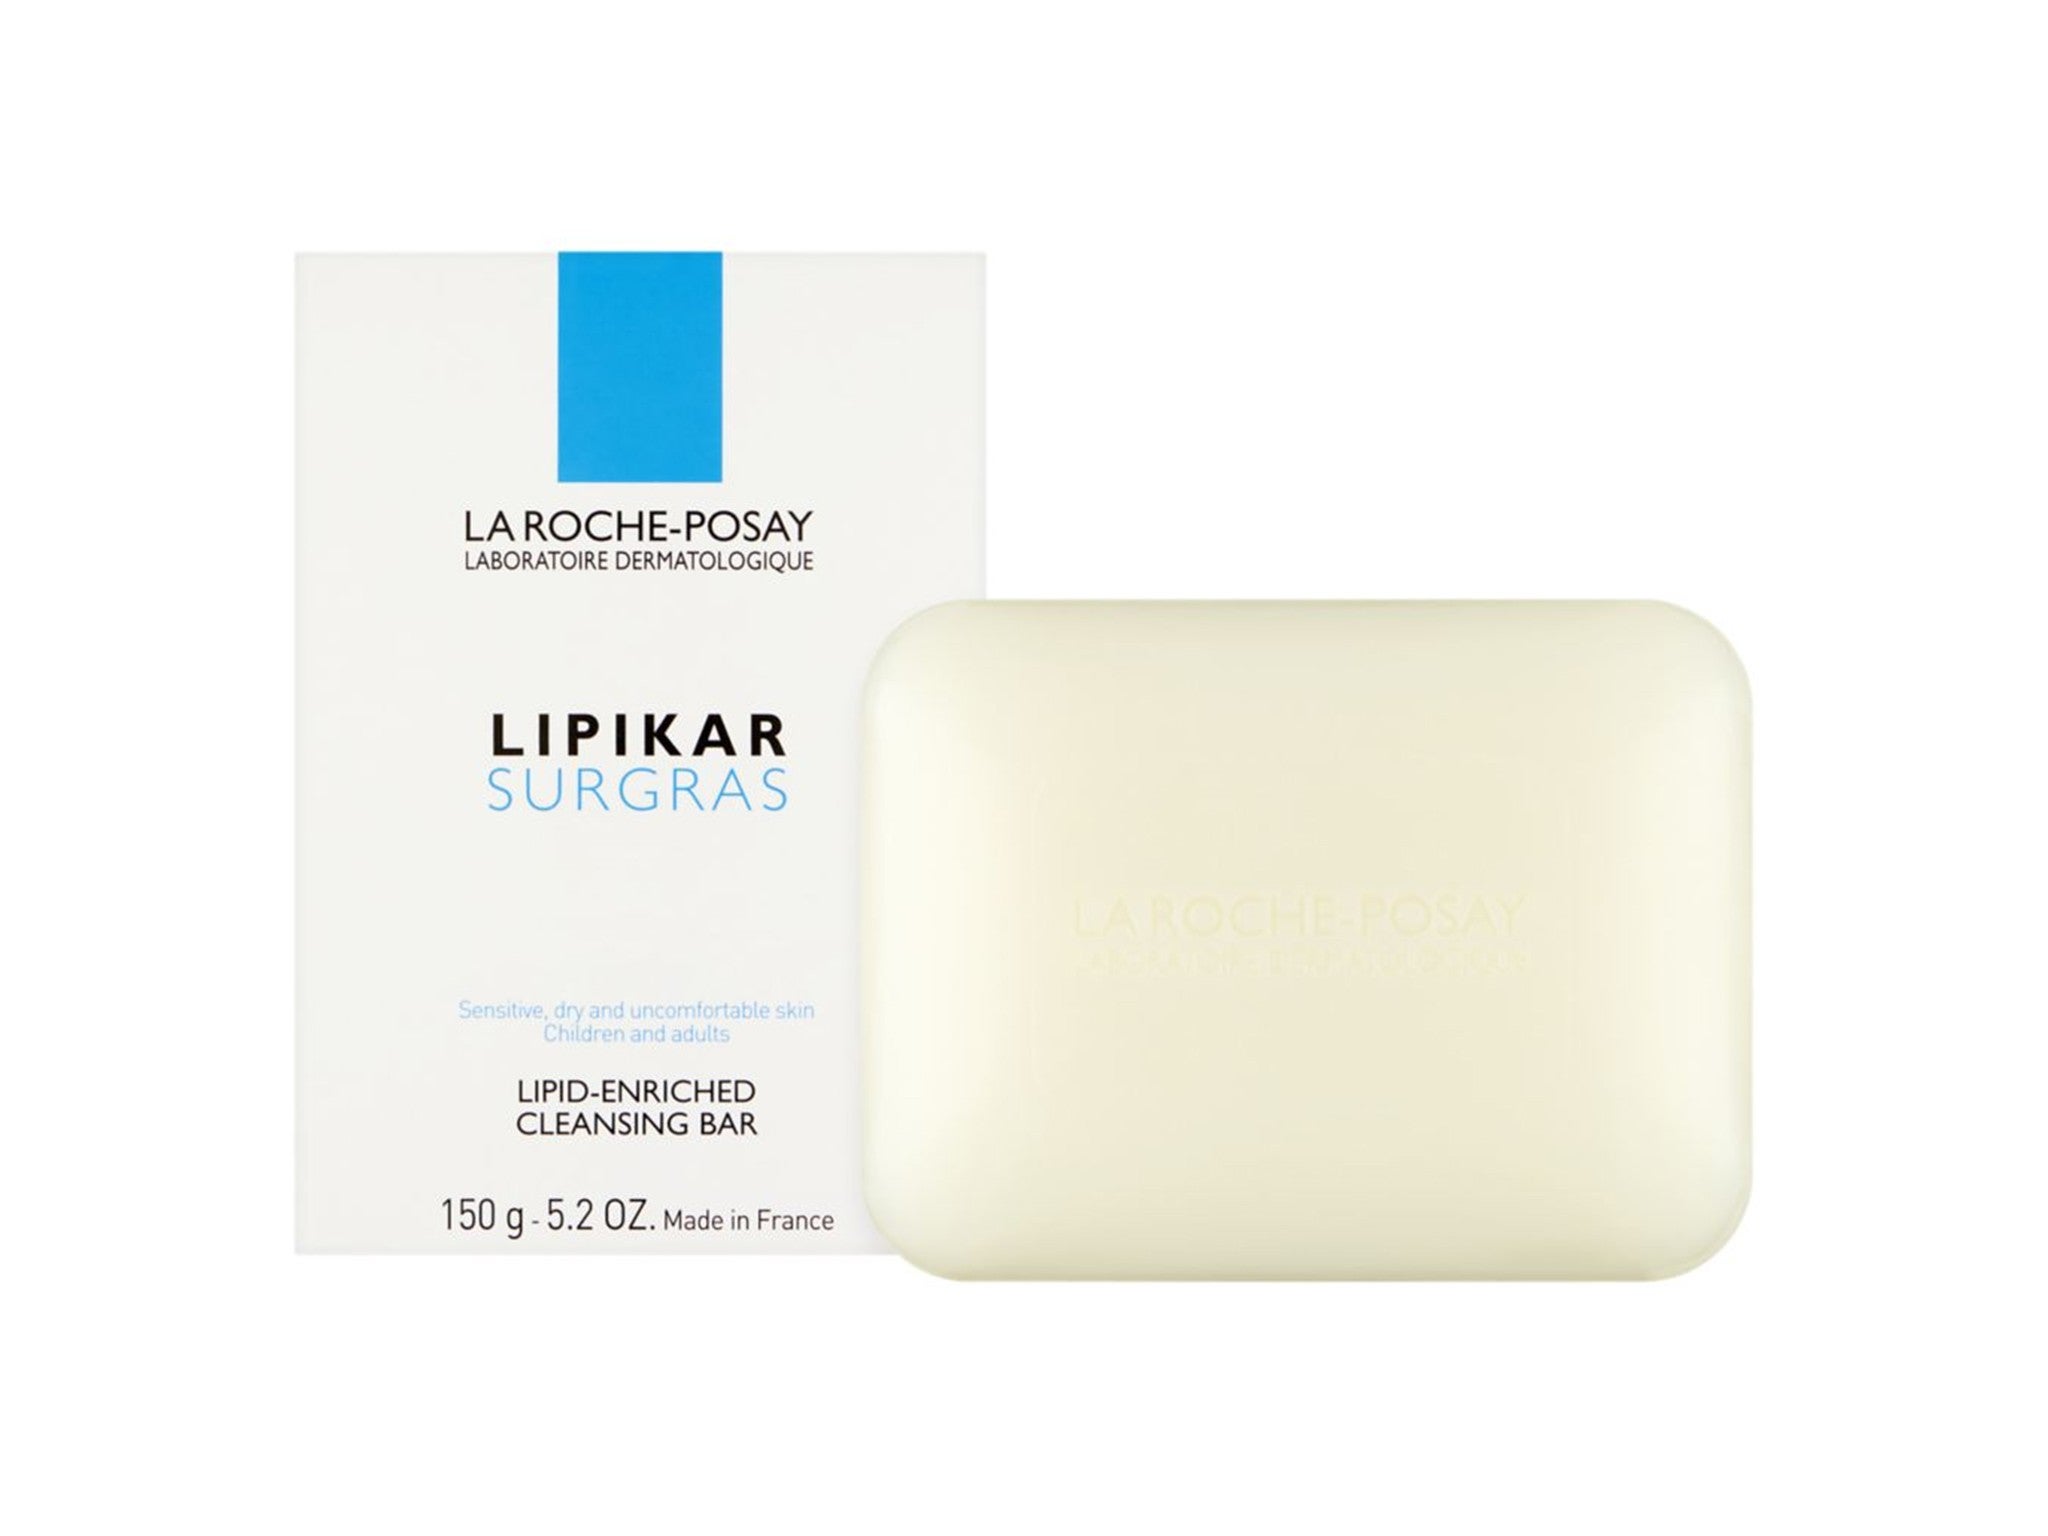 La Roche-Posay lipikar moisturising cleansing bar, 150g indybest.jpg